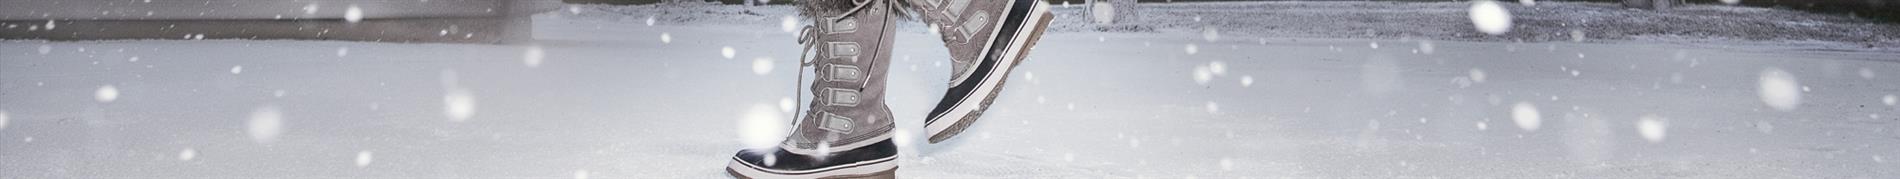 Sanuk Snow Boots for Women 